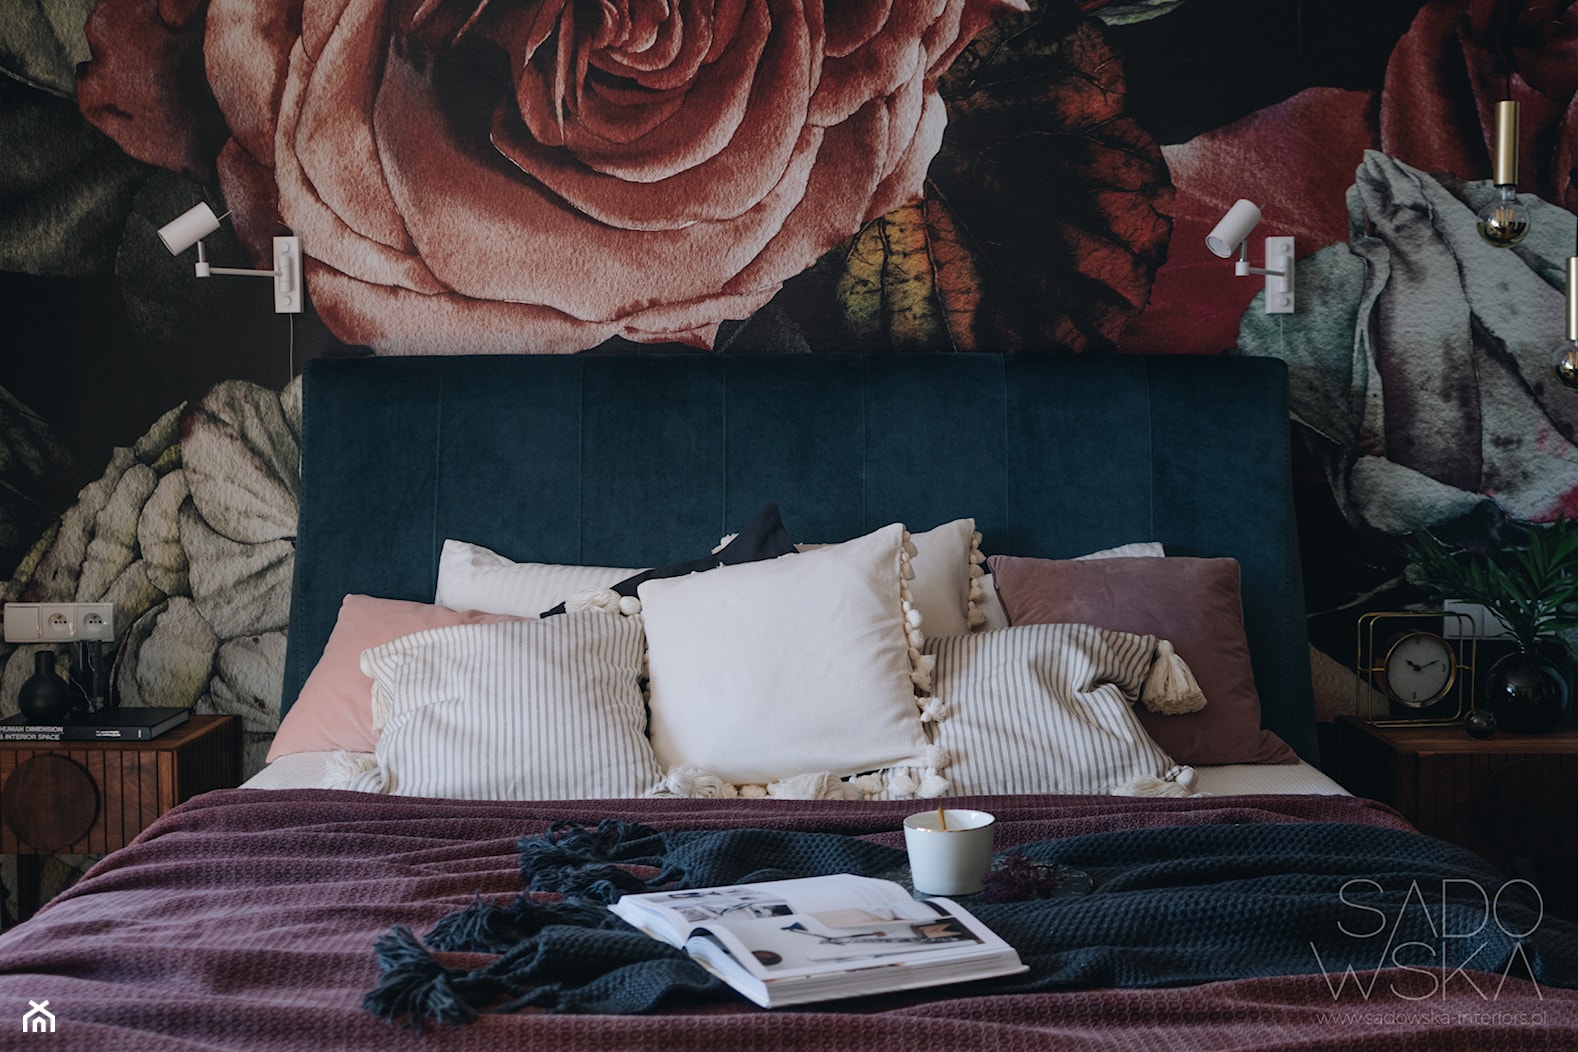 Romantyczna sypialnia - zdjęcie od sadowska-interiors - Homebook